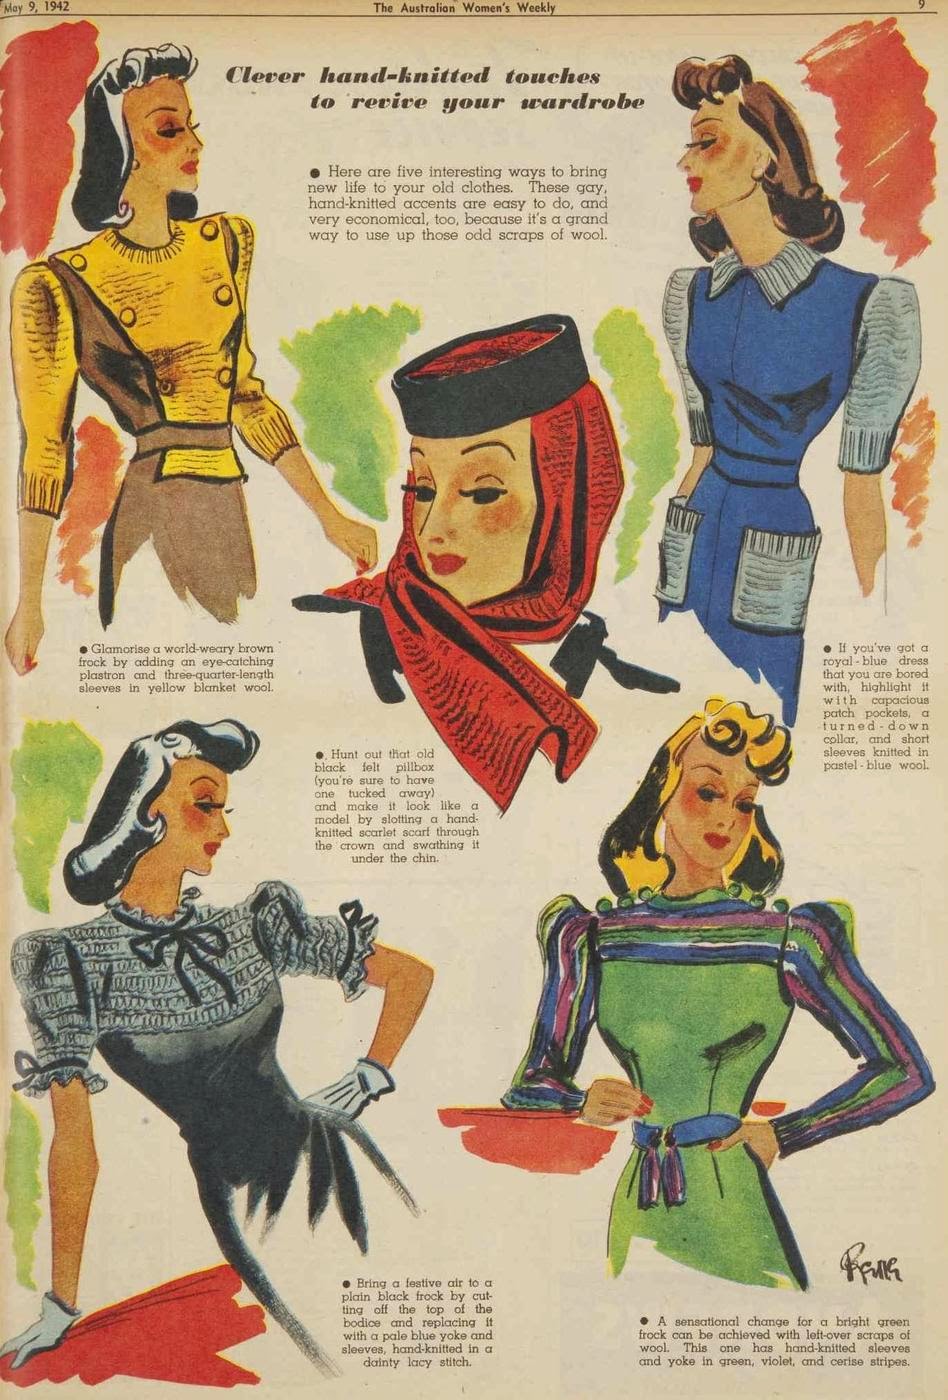 vintage 1940s fashion tips